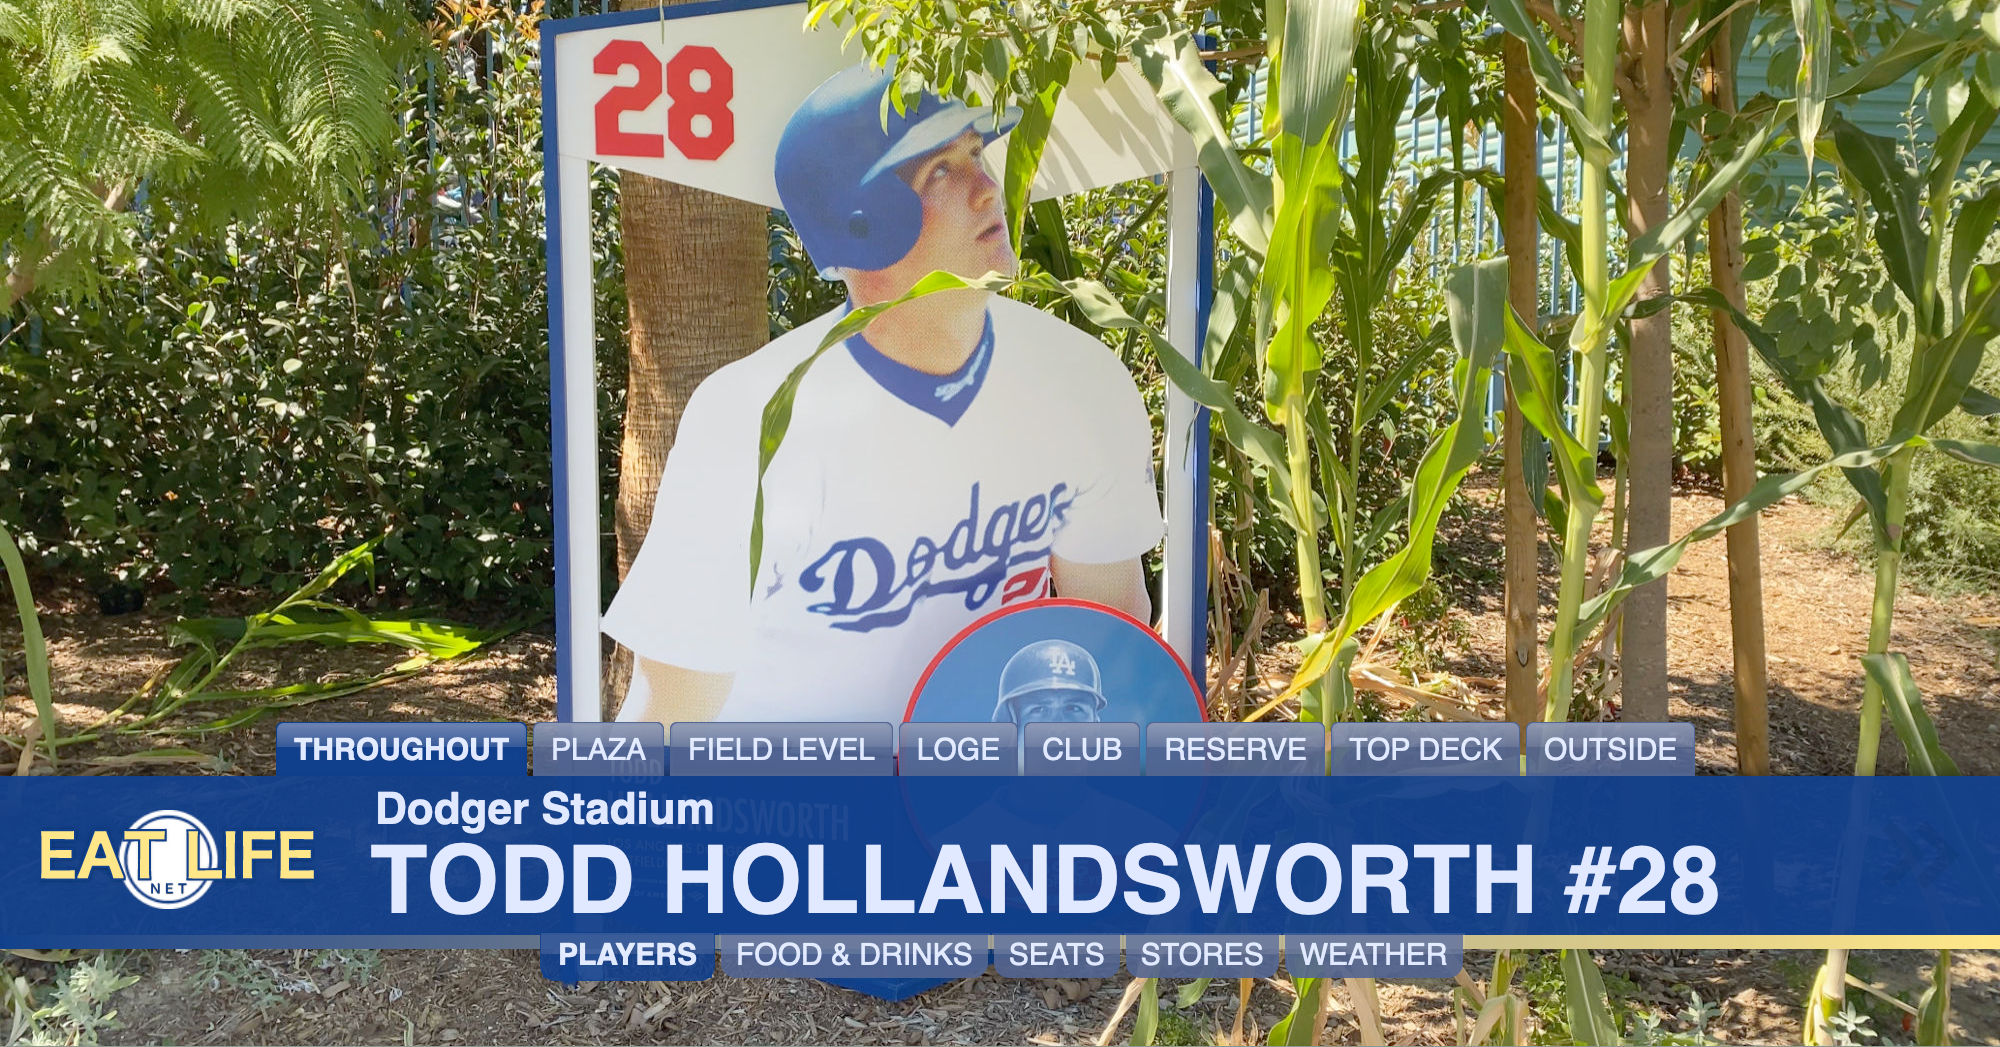 Todd Hollandsworth #28